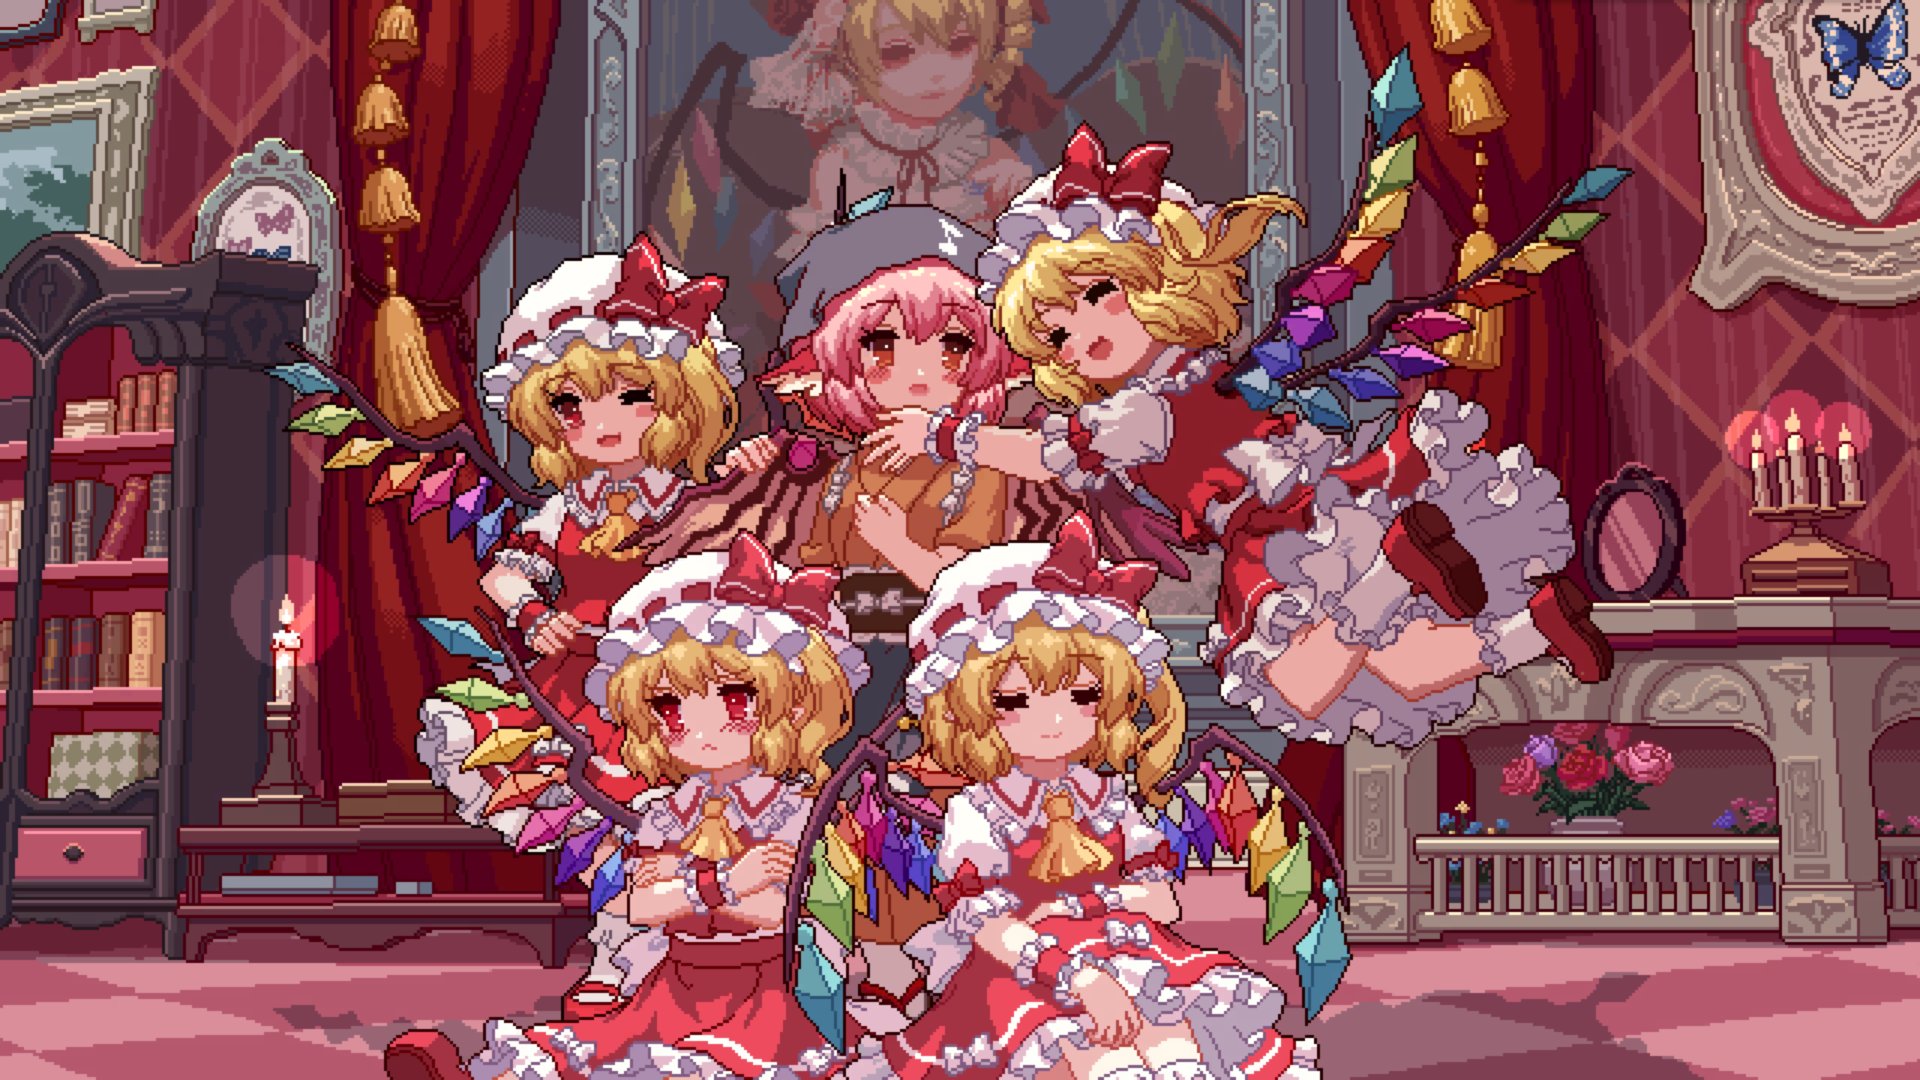 Touhou Pixel Art Digital Art Flandre Scarlet Arms Crossed Anime Girls Pixels Wings Dress Hat Bow Tie 1920x1080